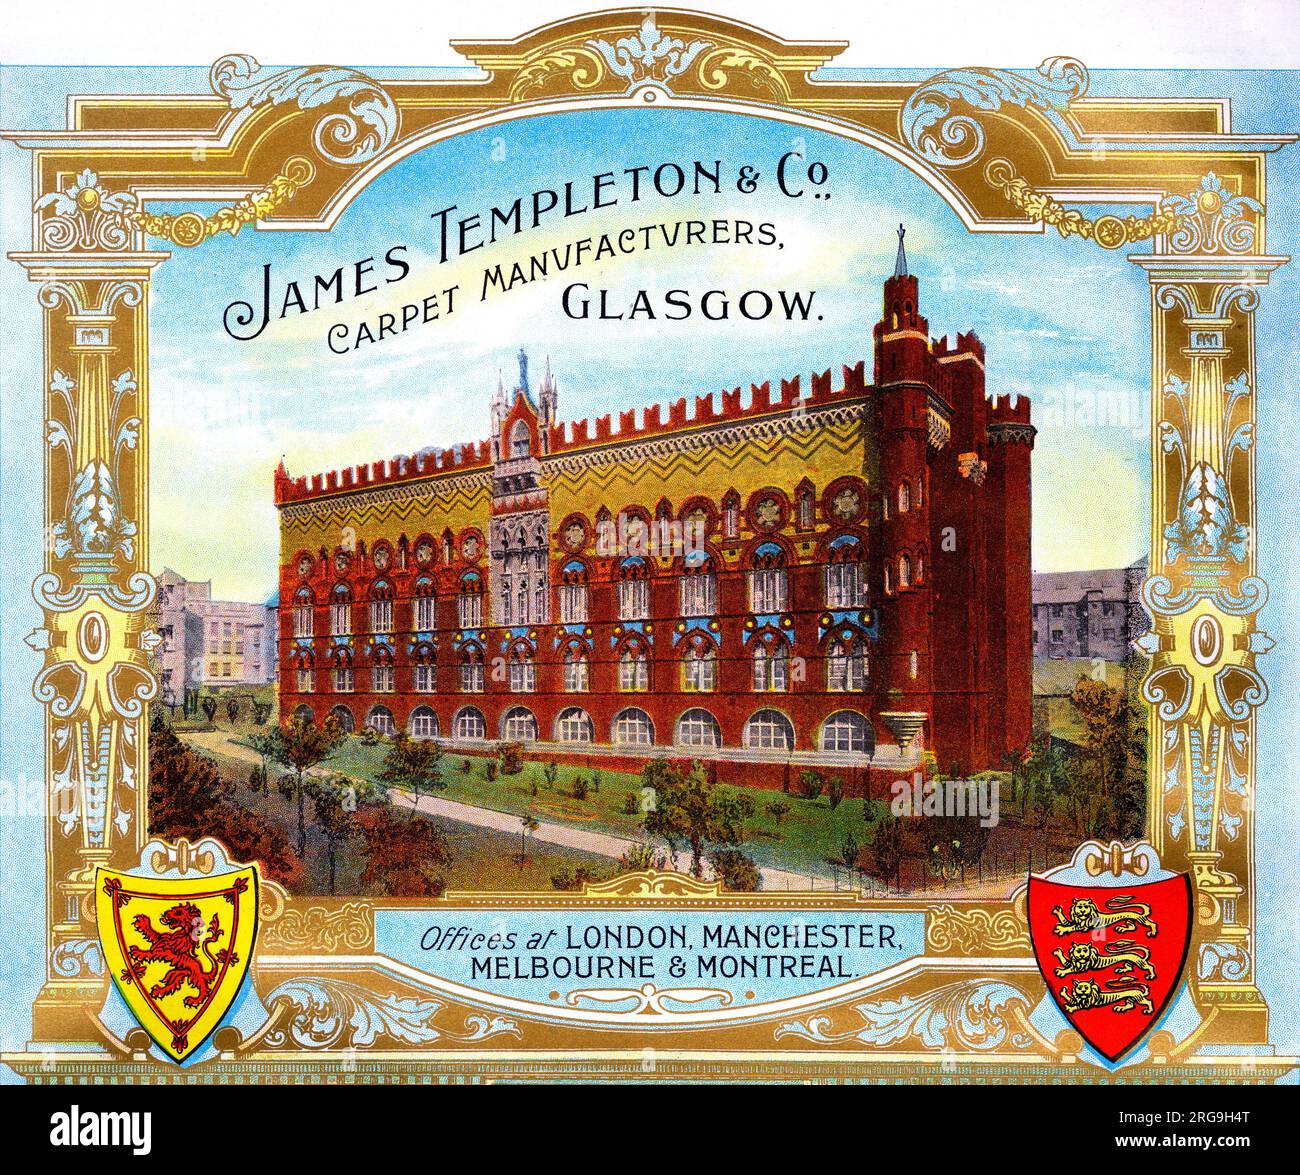 James Templeton, Carpet Manufacturers, Glasgow  - Scotland's Industrial Souvenir 1905. Stock Photo